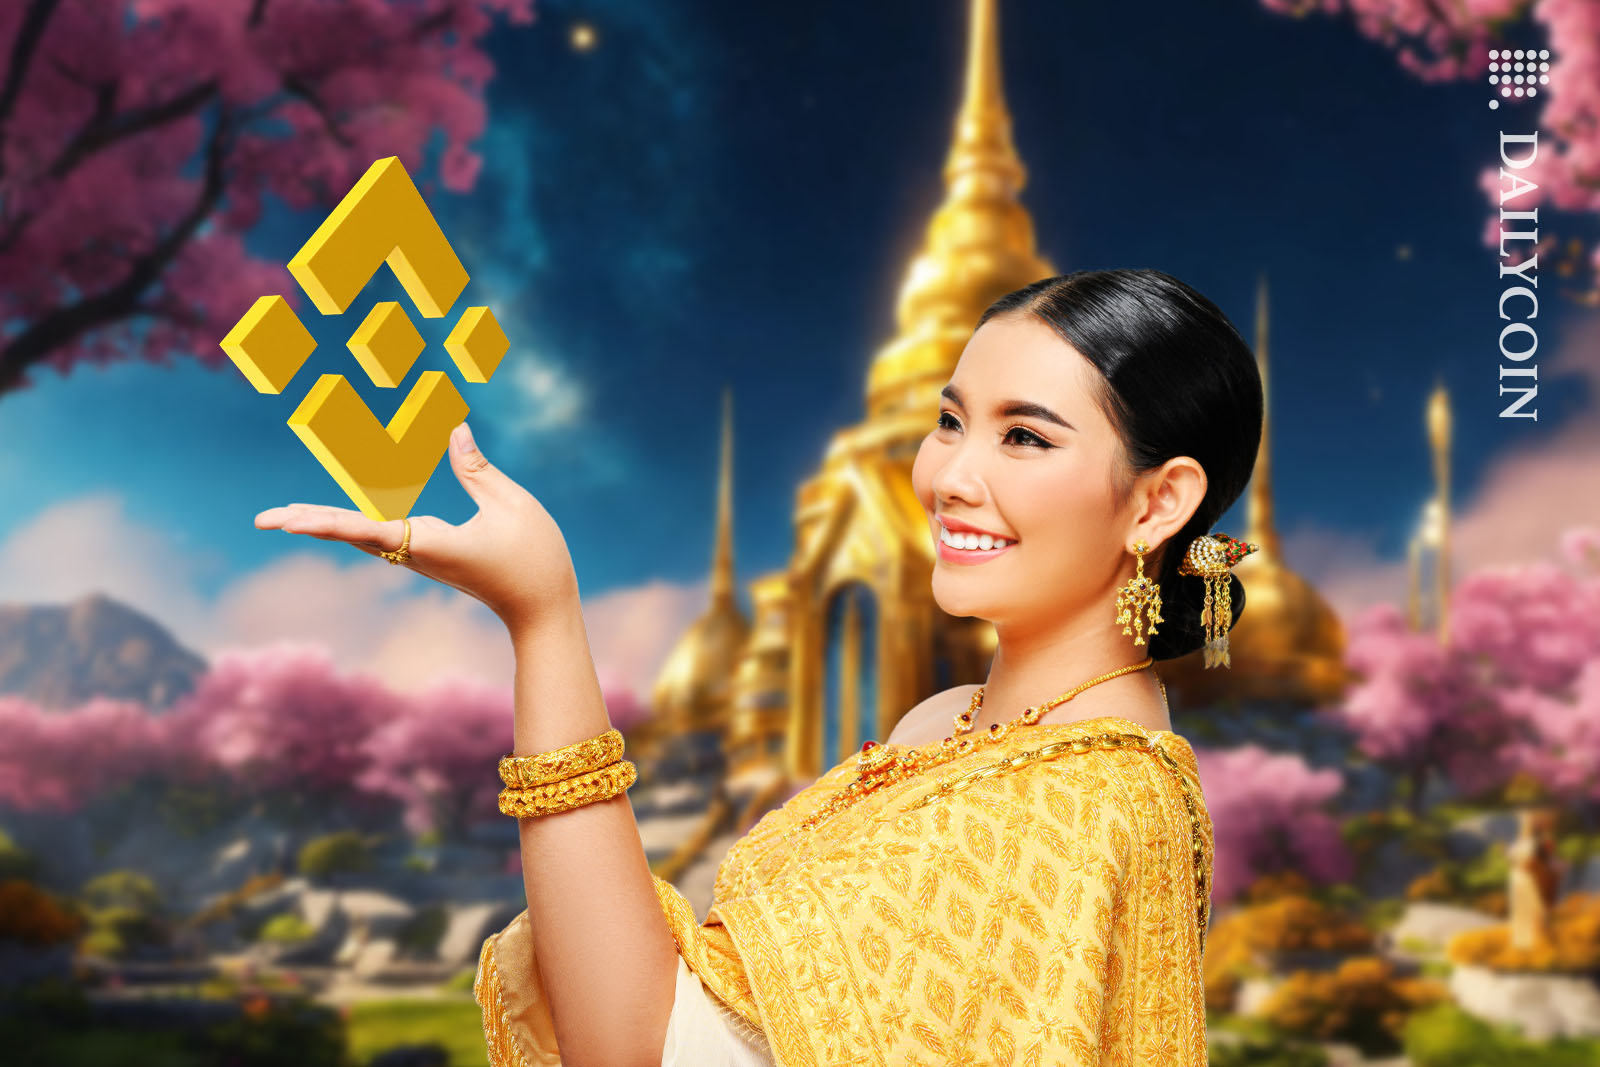 Thai woman smiling holding Binance logo in a private Thailand garden land.